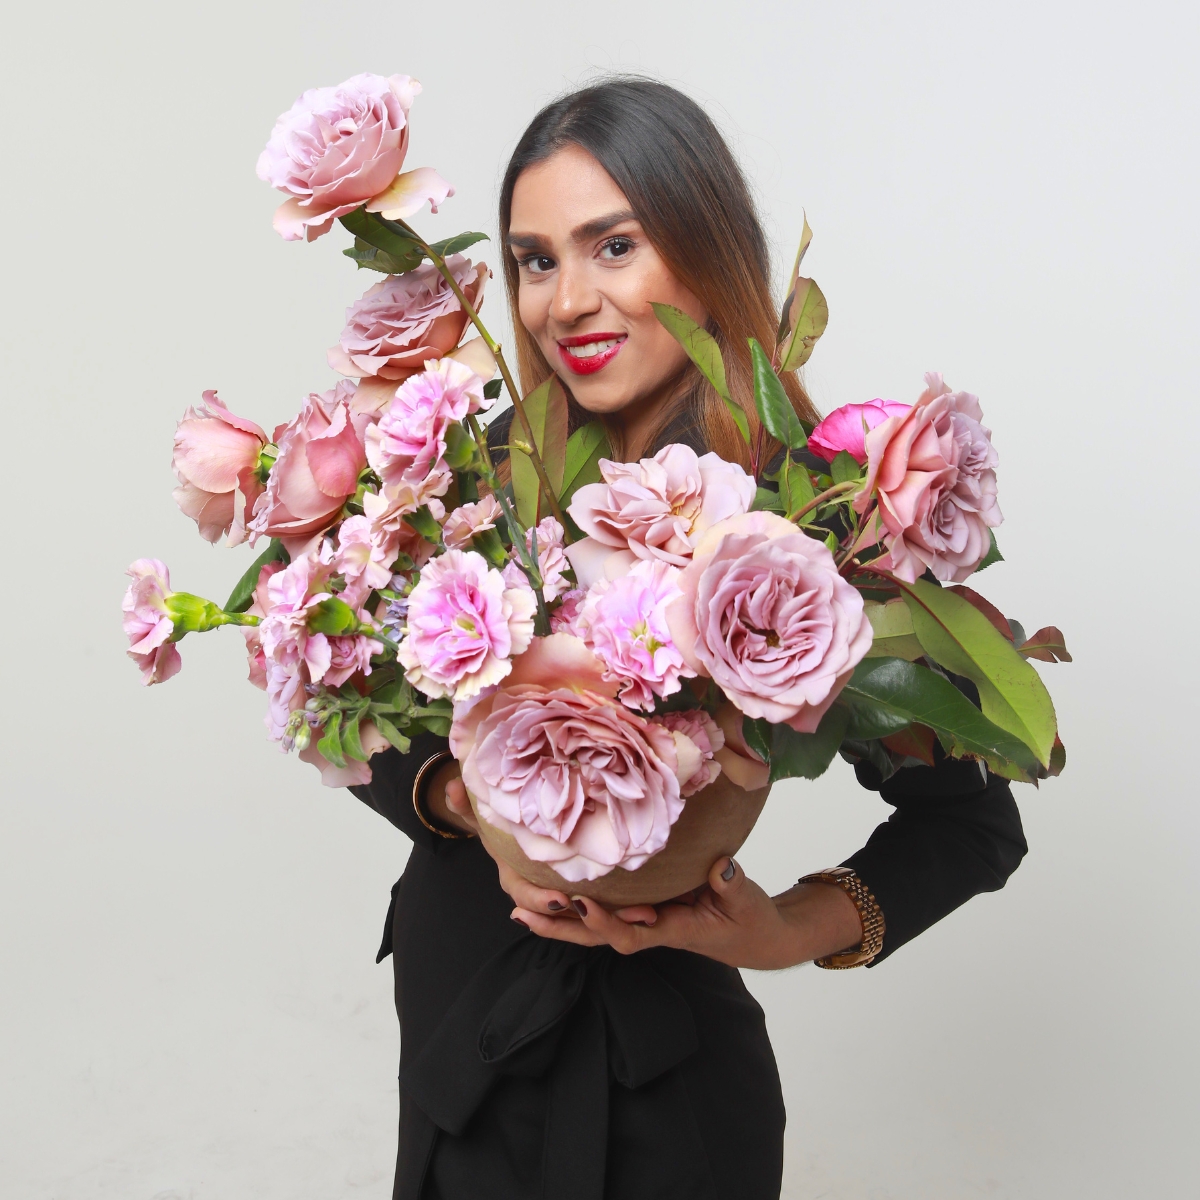 Shallima Turizo floral designer